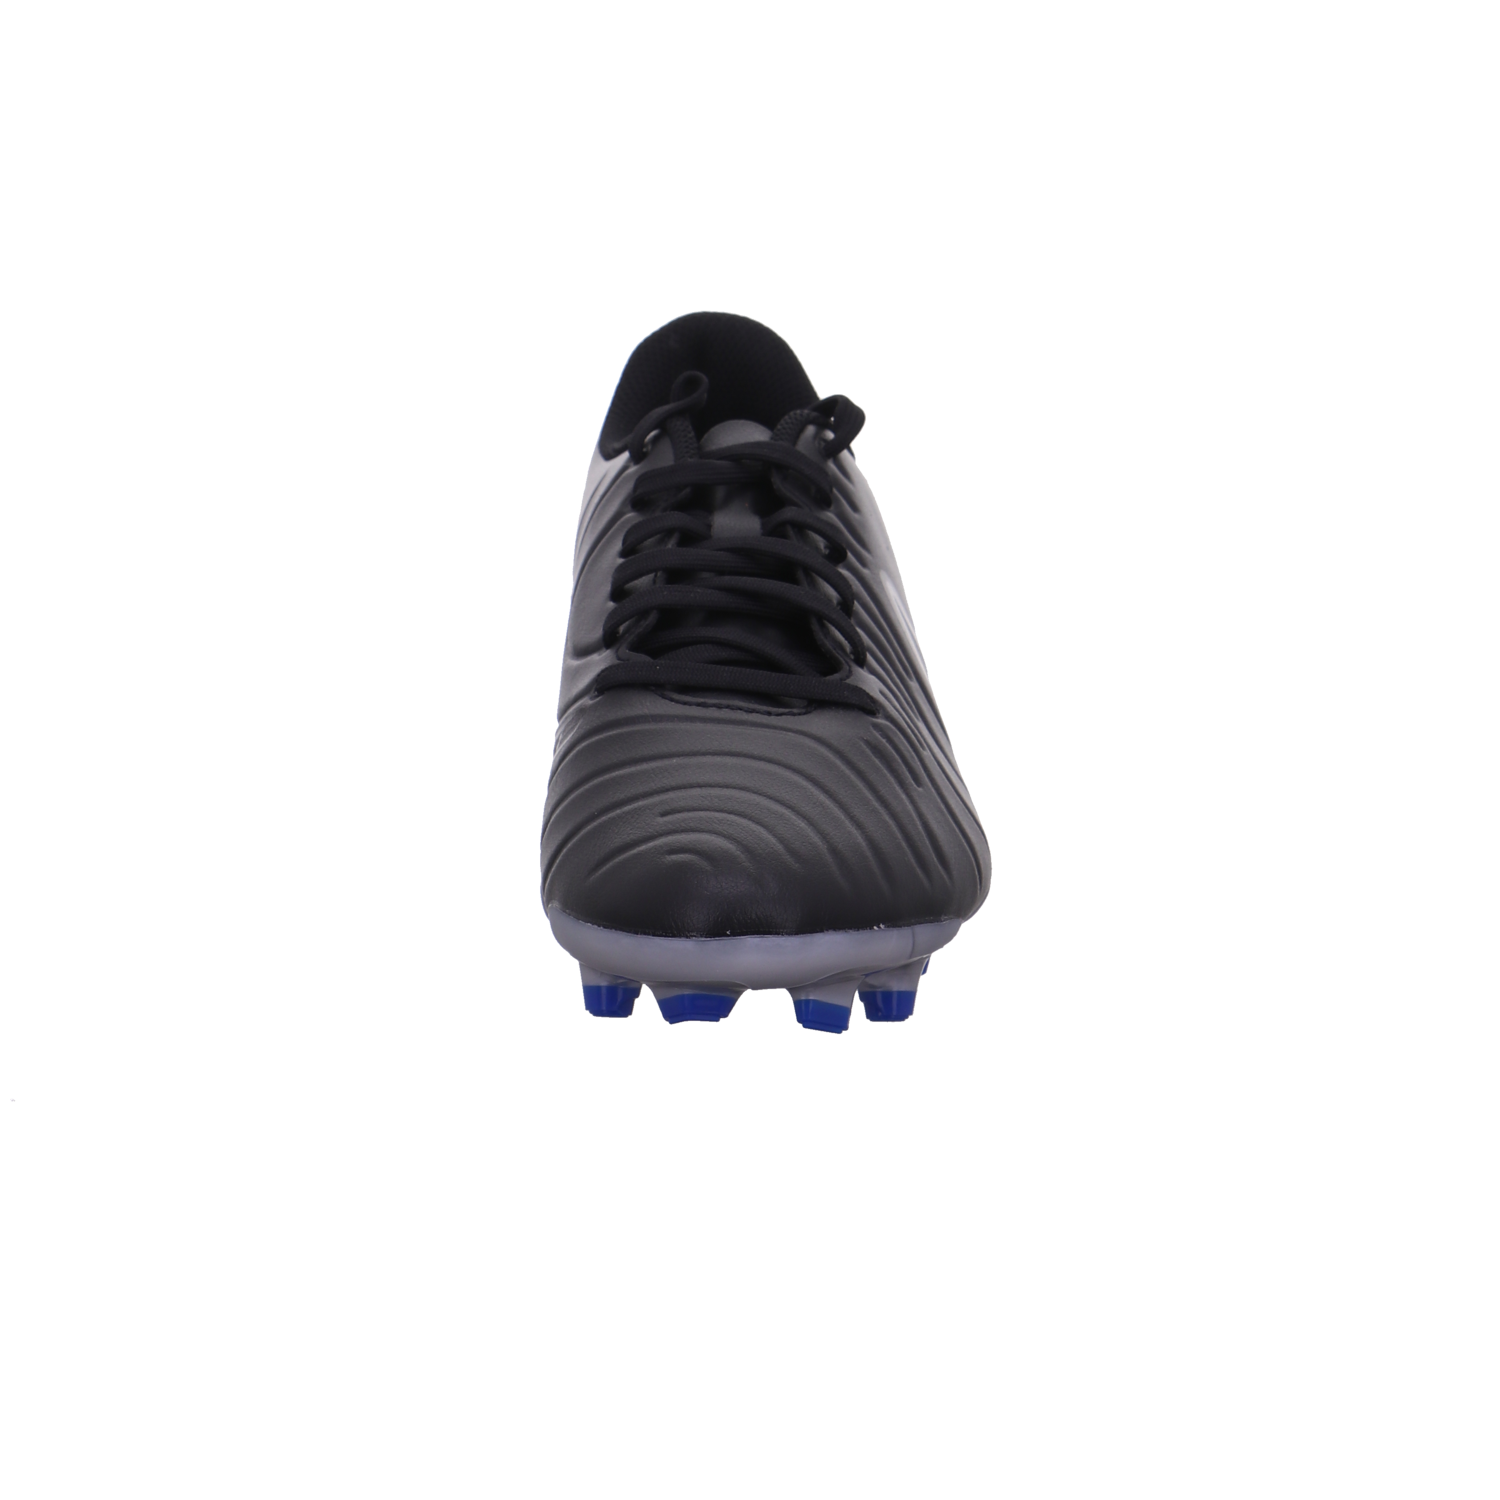 Nike Fußballschuhe schwarz kombi Bild3